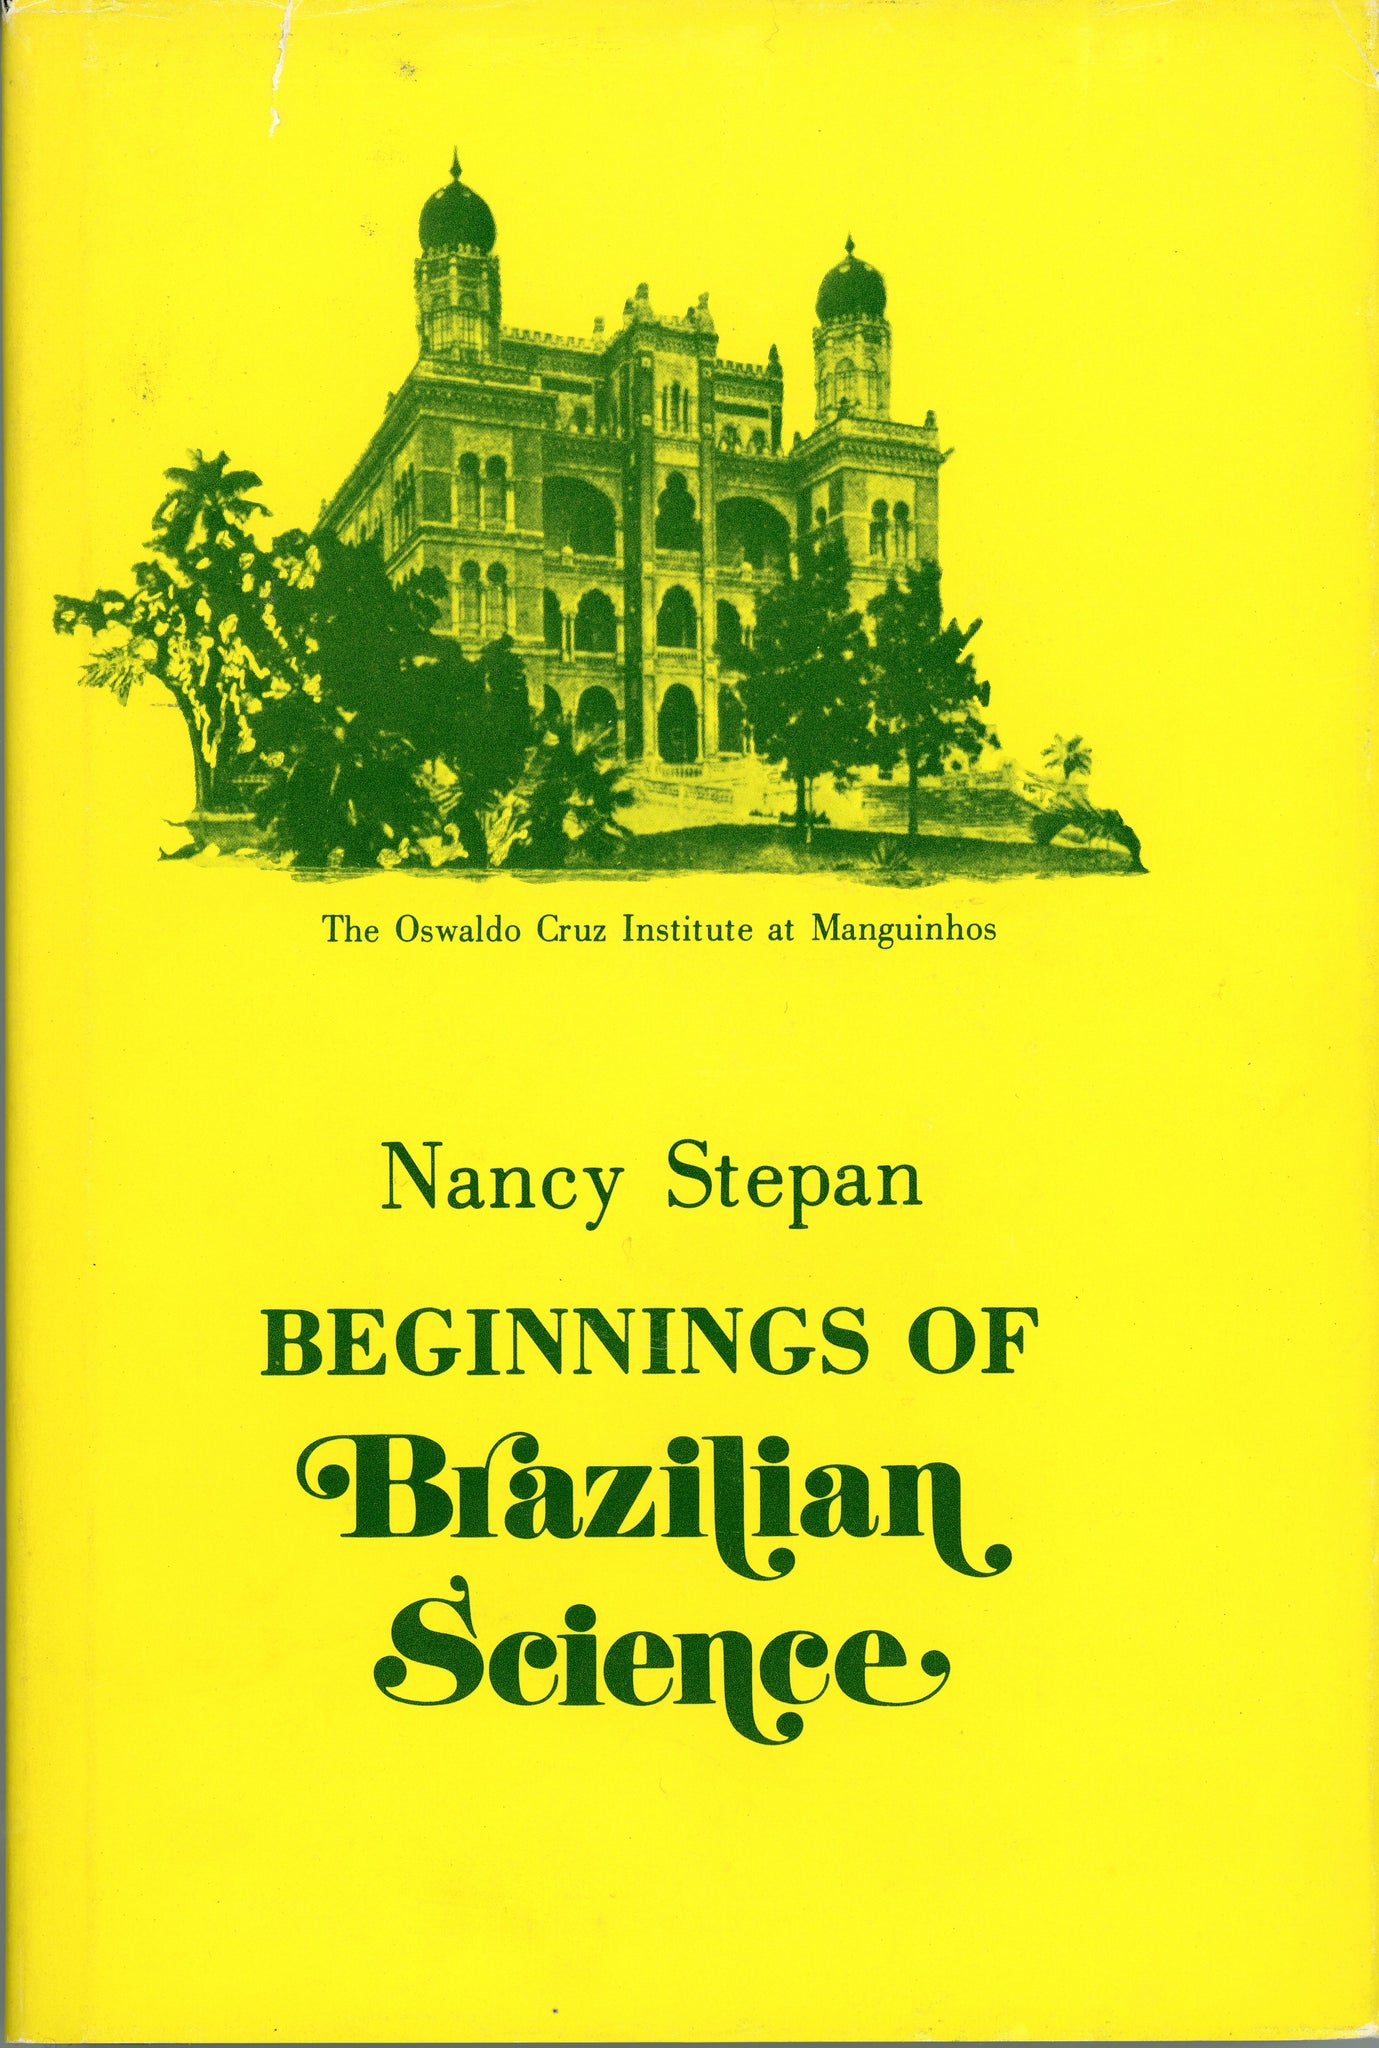 Beginnings of Brazilian Science